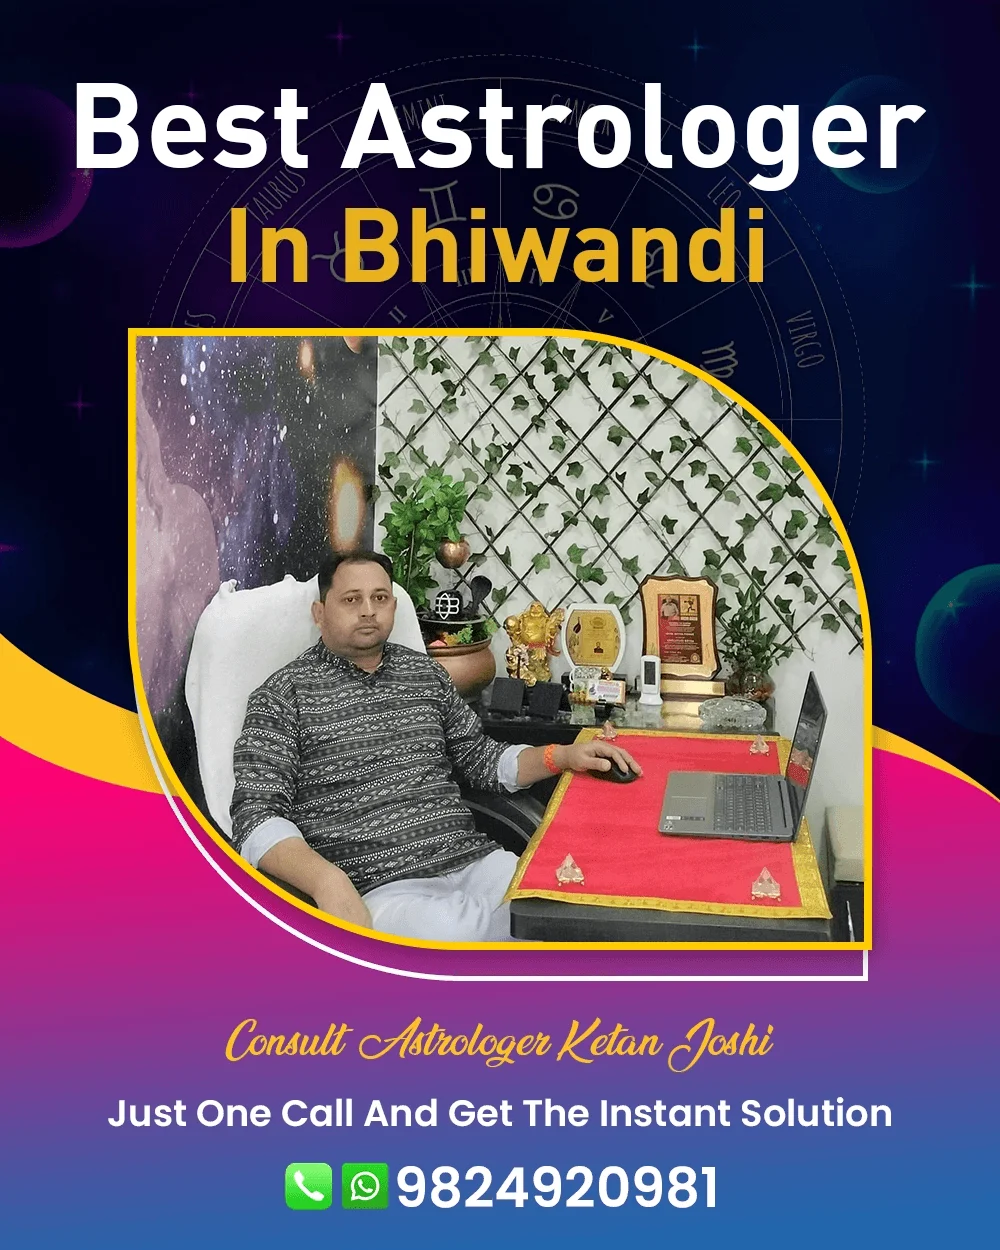 Best Astrologer In Bhiwandi